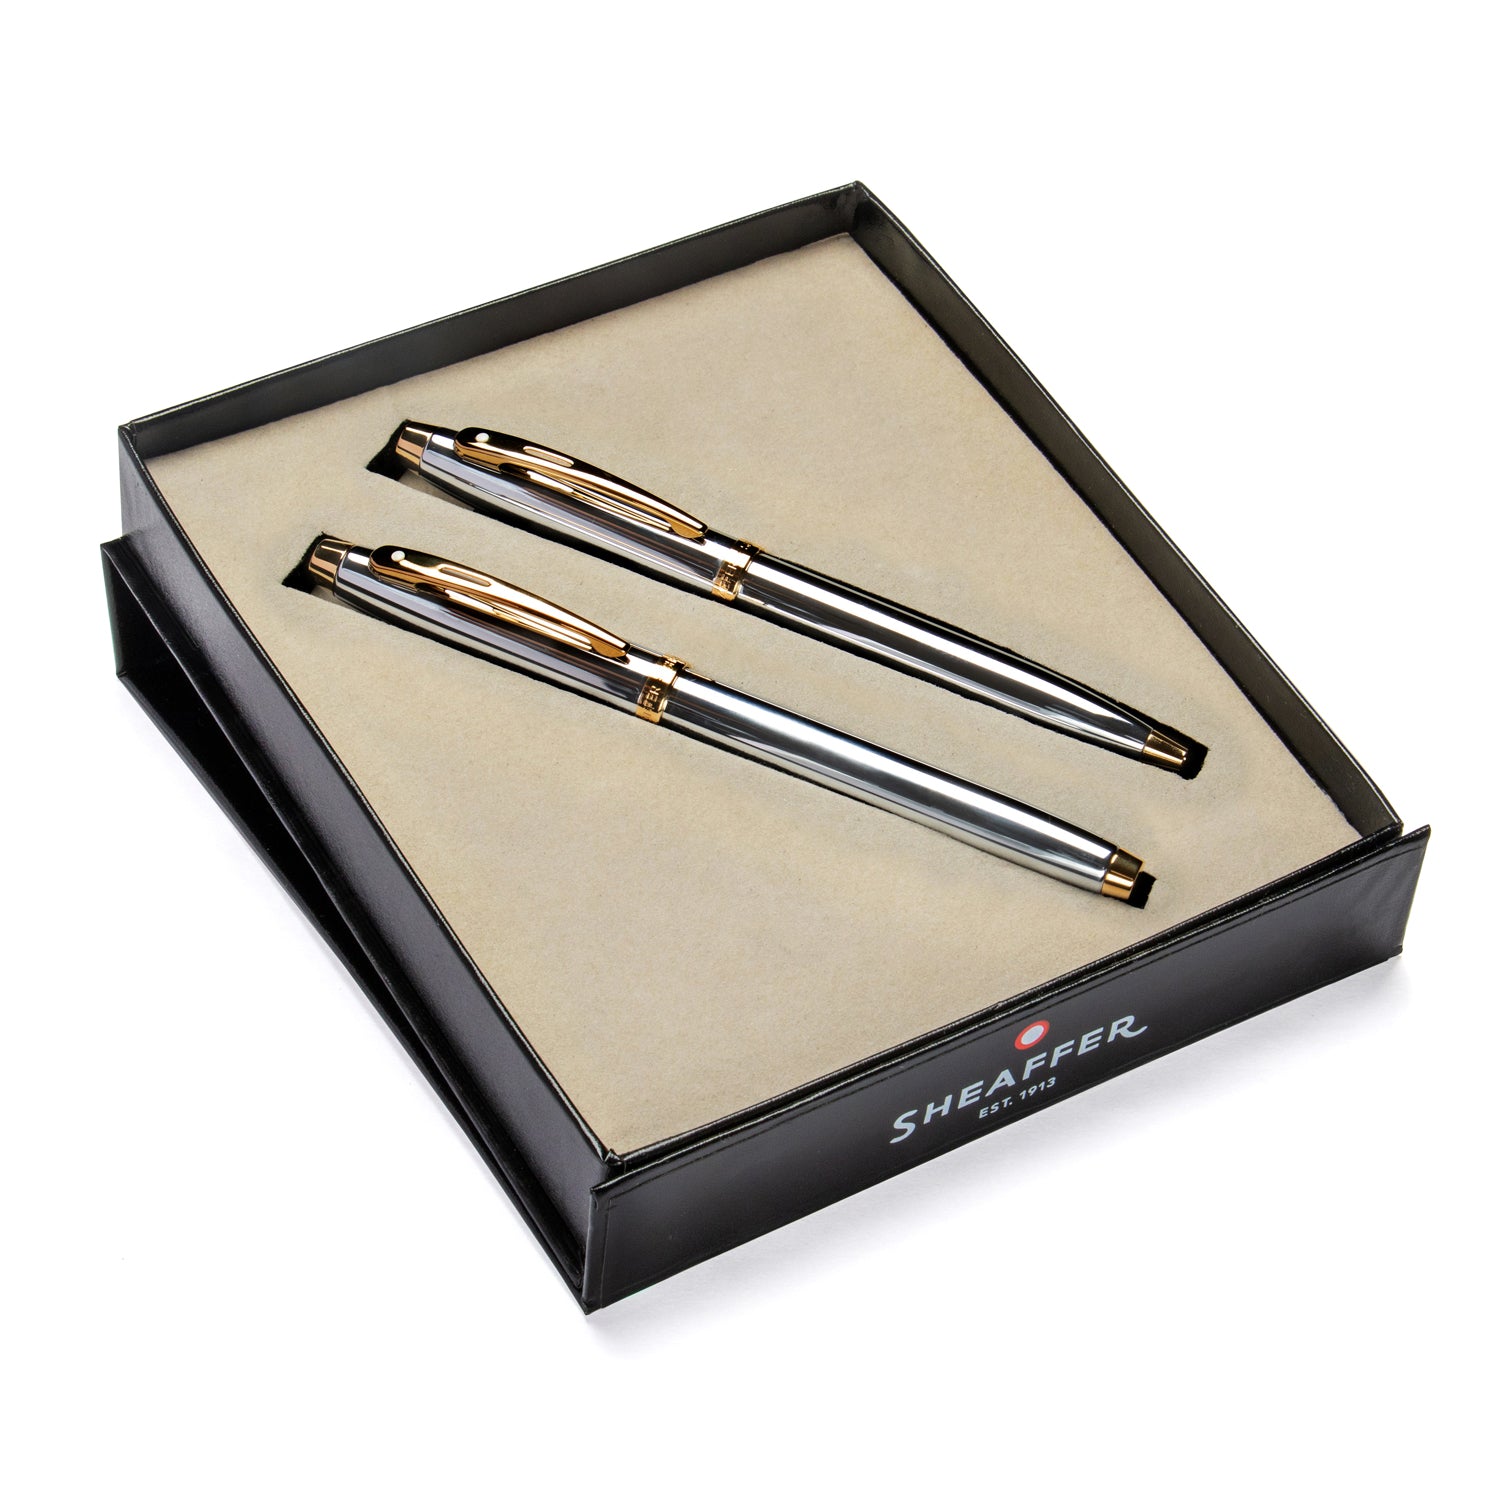 Sheaffer Pen and Mechanical Pencil in Original Box, Chrome, Sheaffer Sailor  - Etsy